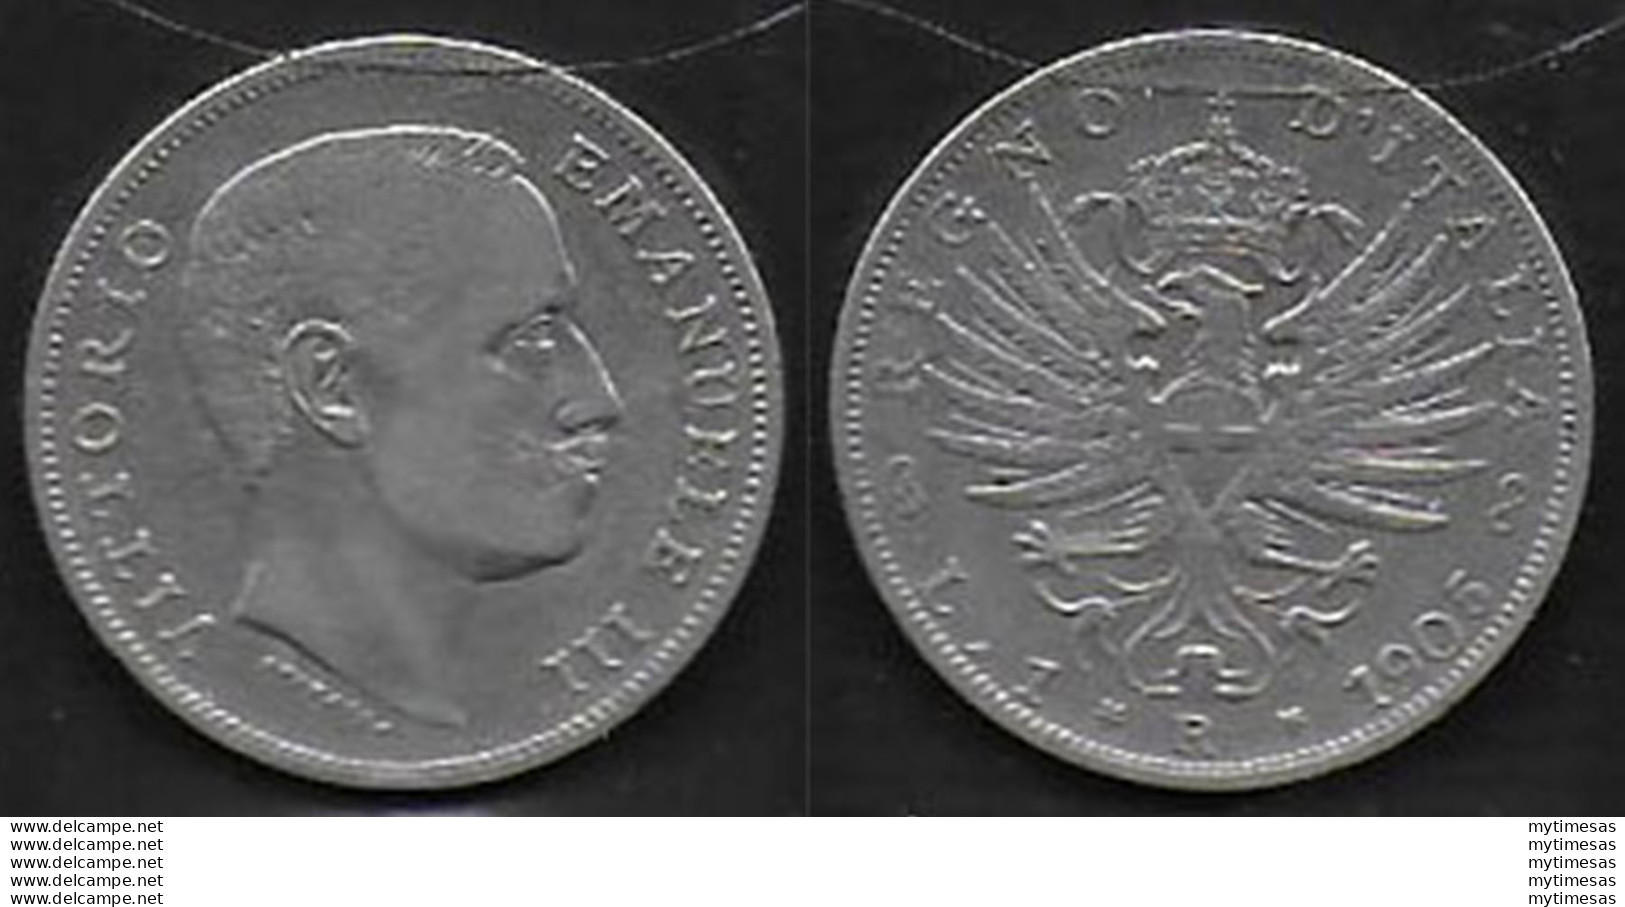 1905 Lire 1 QBB Aquila Sabauda Argento - 1900-1946 : Victor Emmanuel III & Umberto II